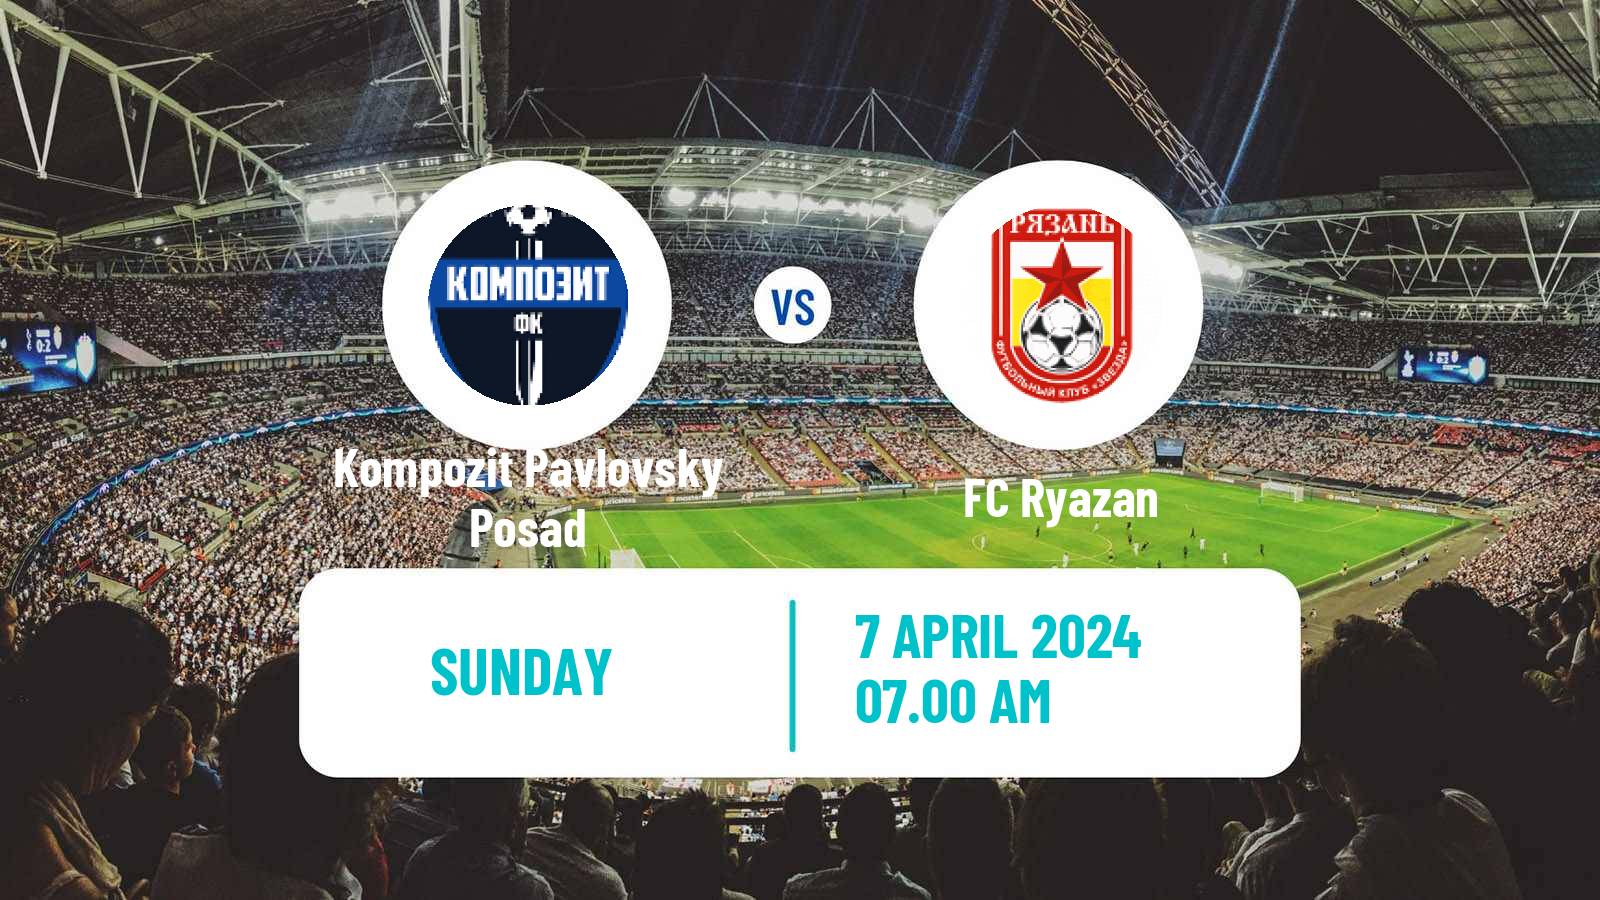 Soccer FNL 2 Division B Group 3 Kompozit Pavlovsky Posad - Ryazan